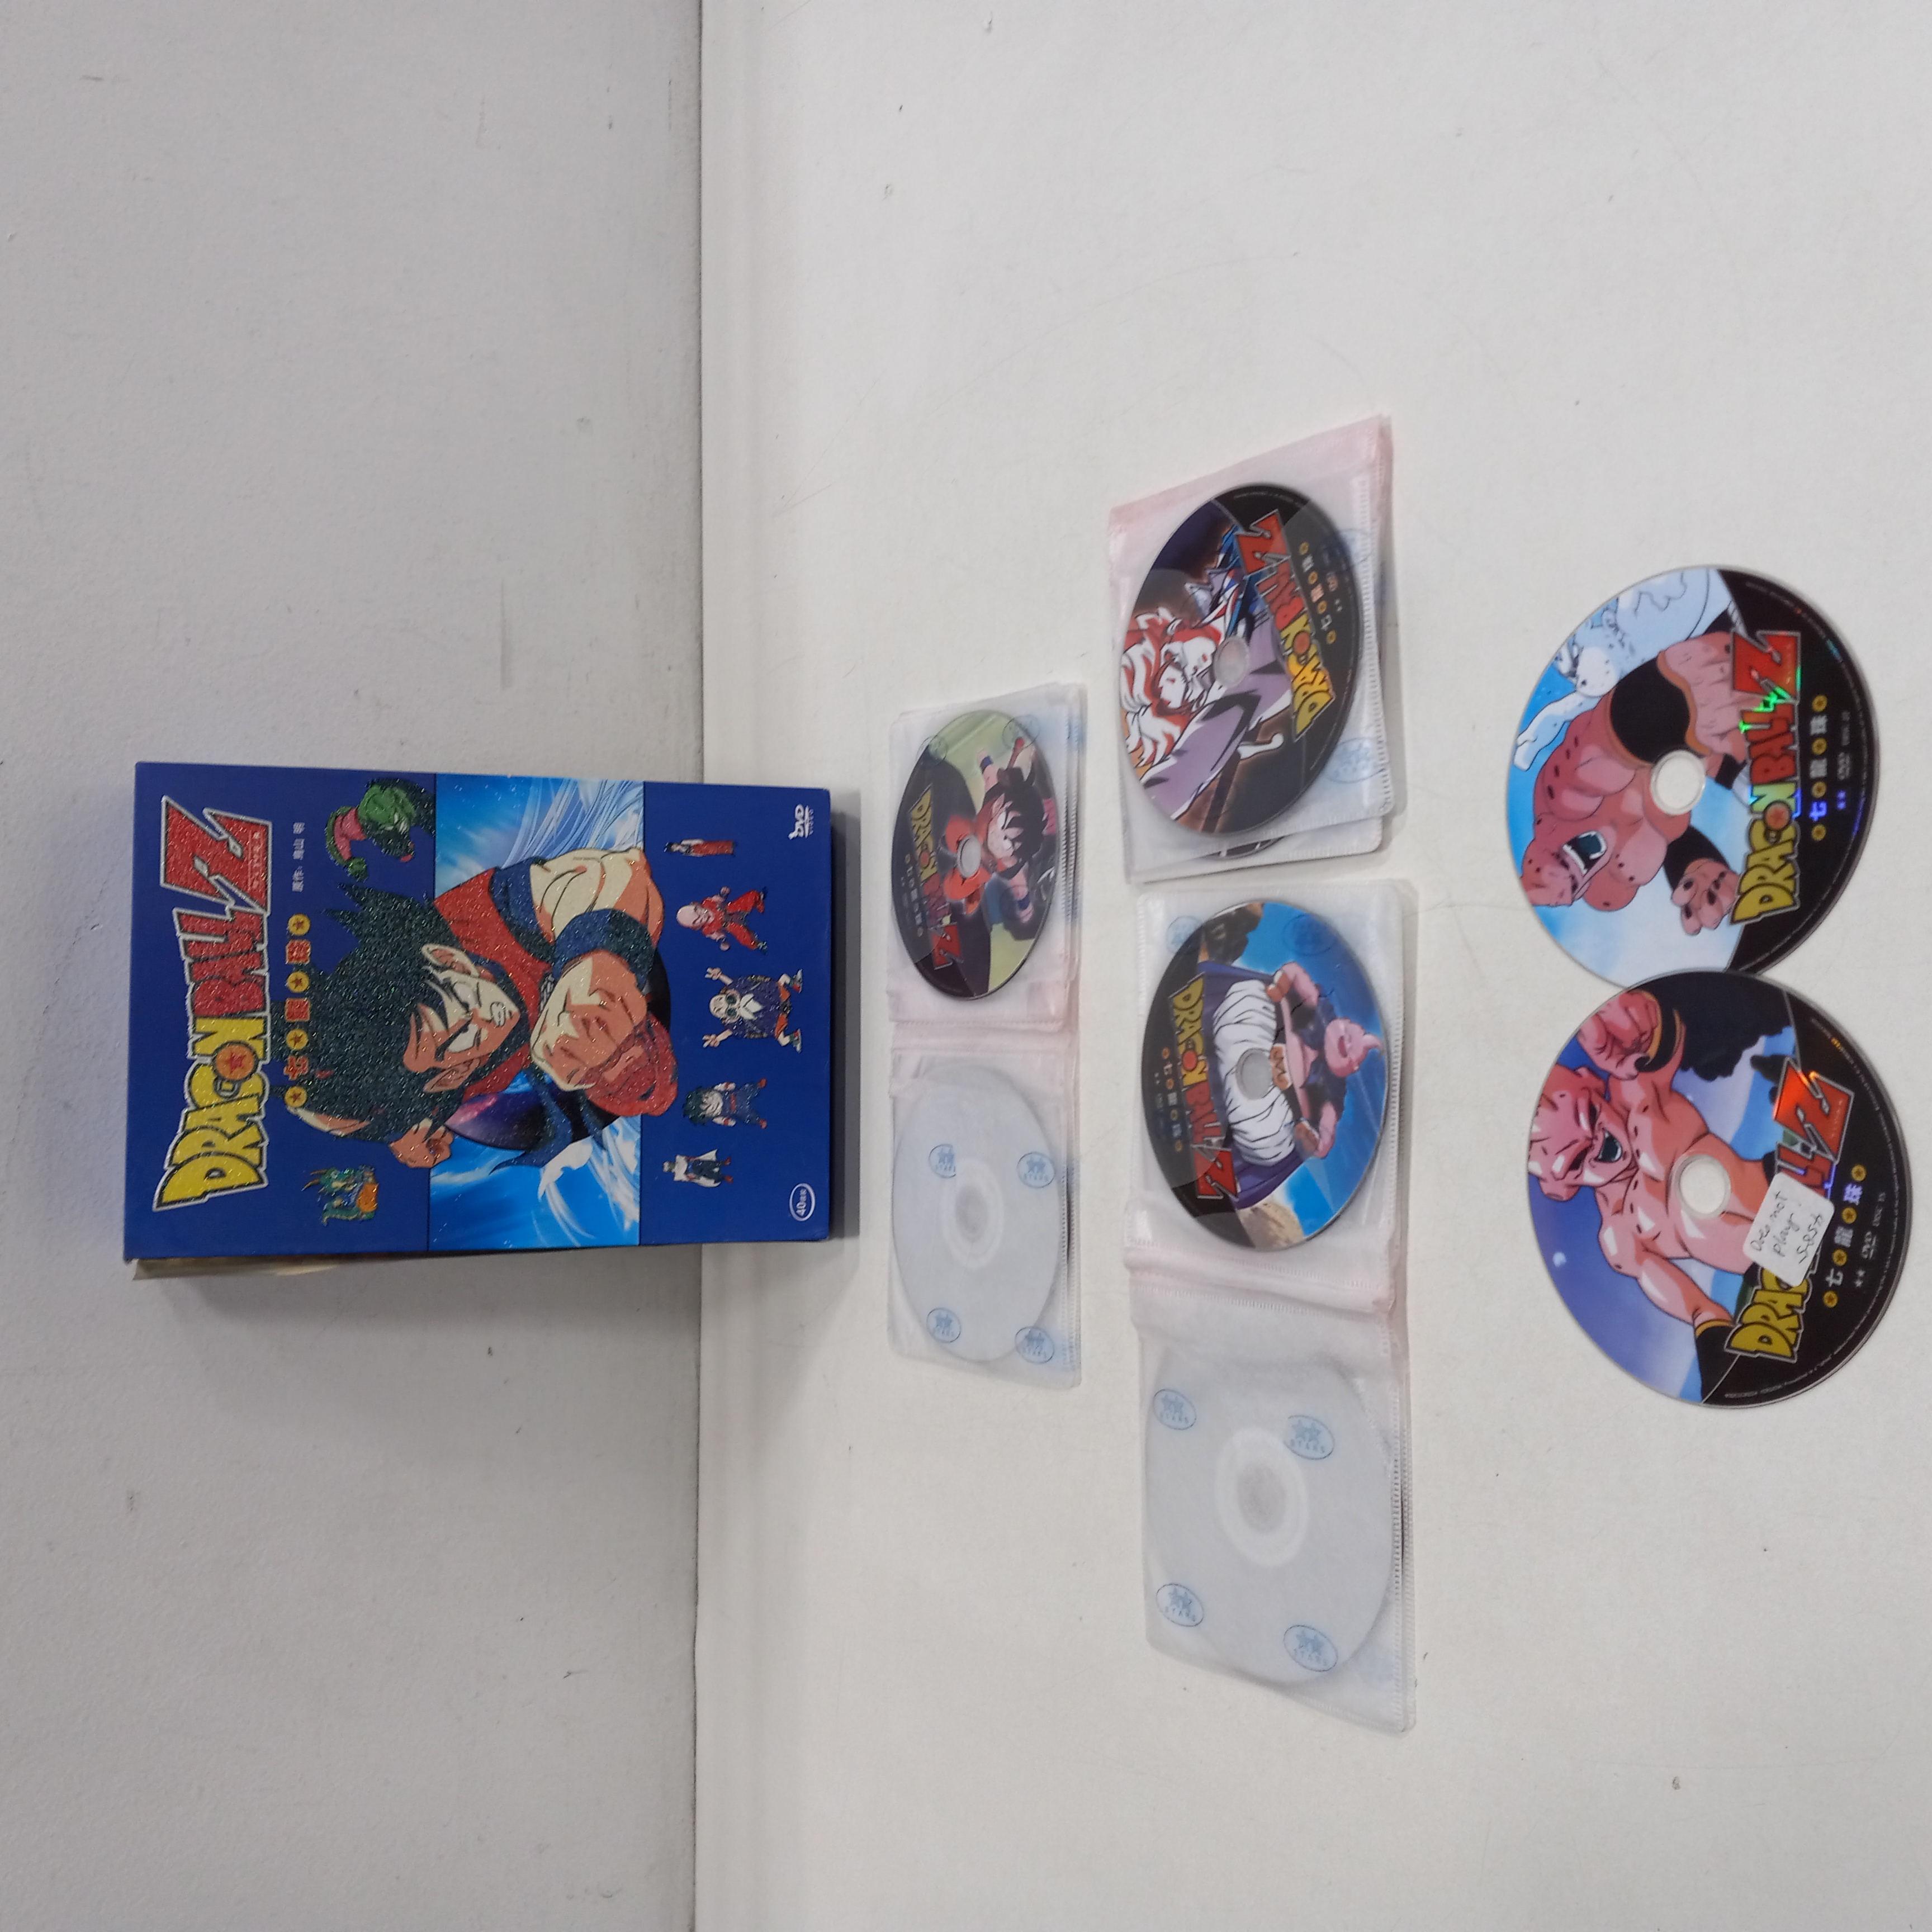 Buy Japanese Dragon Ball Z DVD Box Set for USD 56.70 | GoodwillFinds